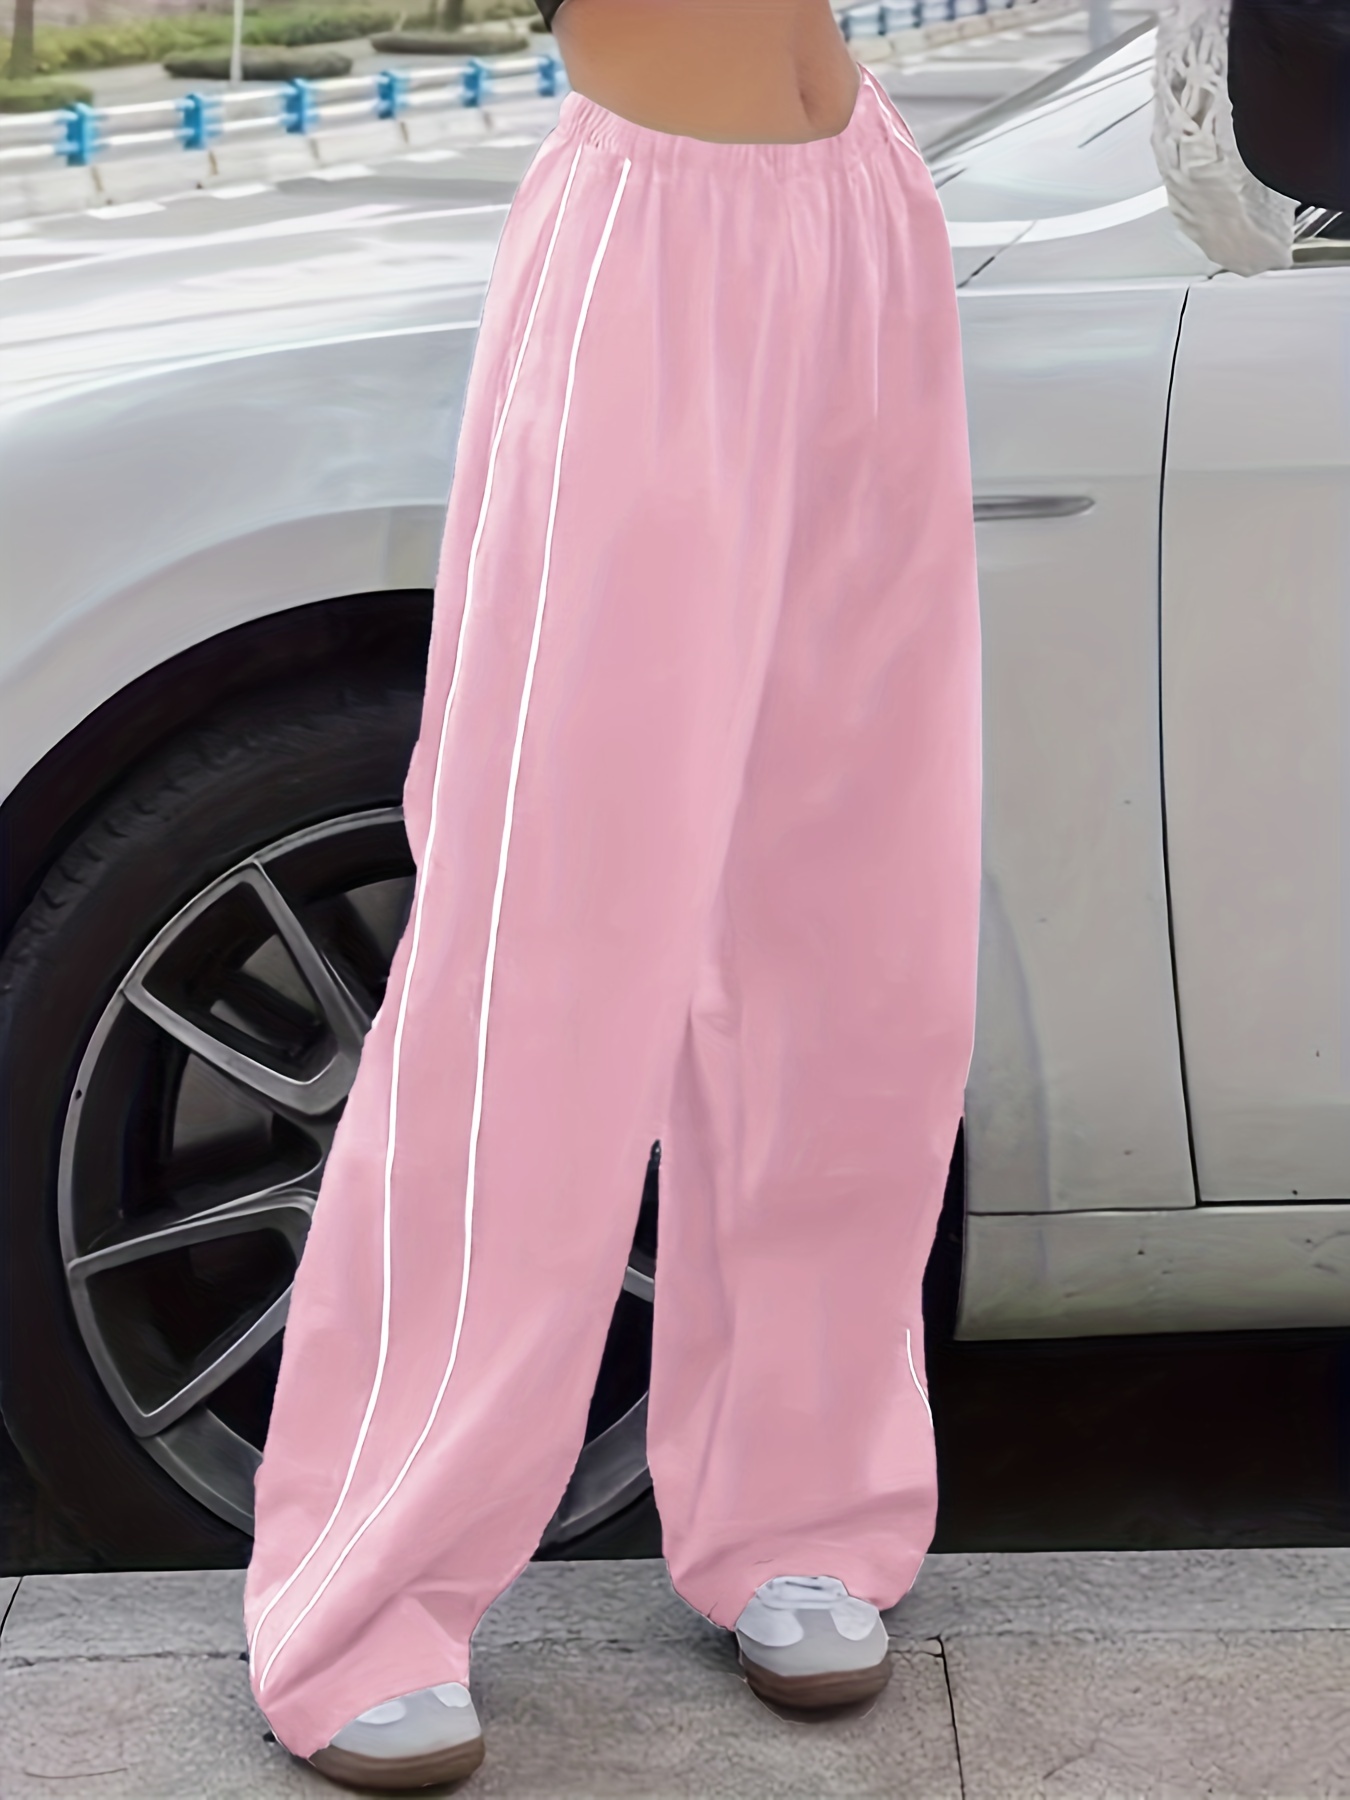 High Waist Sweatpants Women Y2k Clothes Pink Baggy Pants Loose